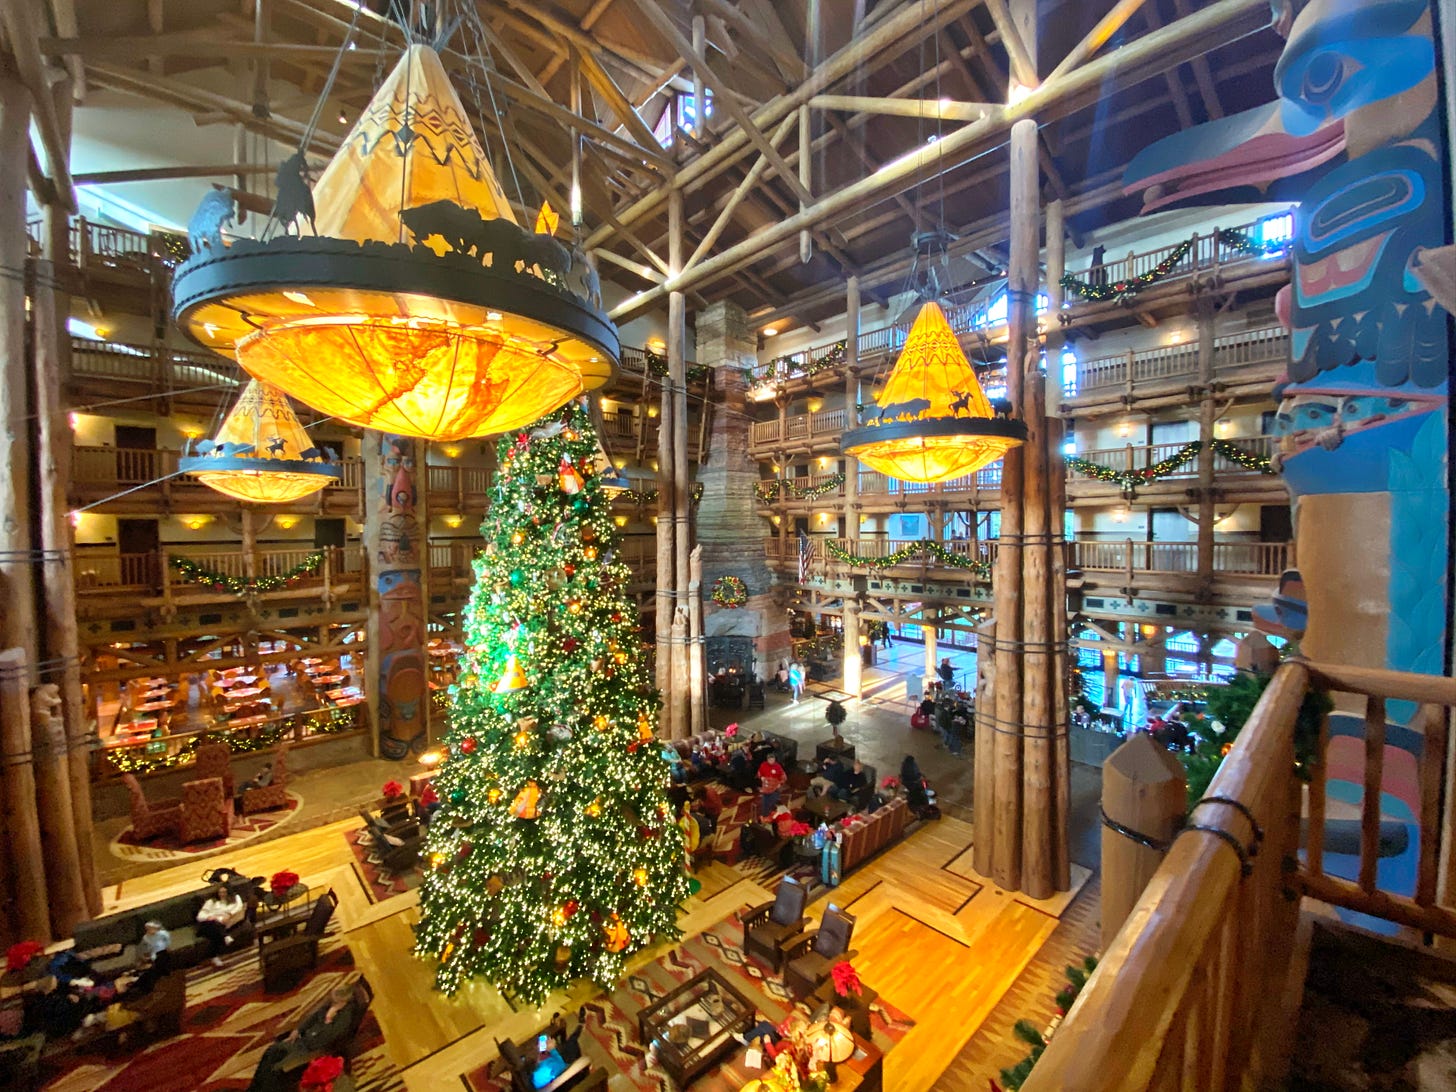 Lobby of Disney World Wilderness Lodge with Christmas tree